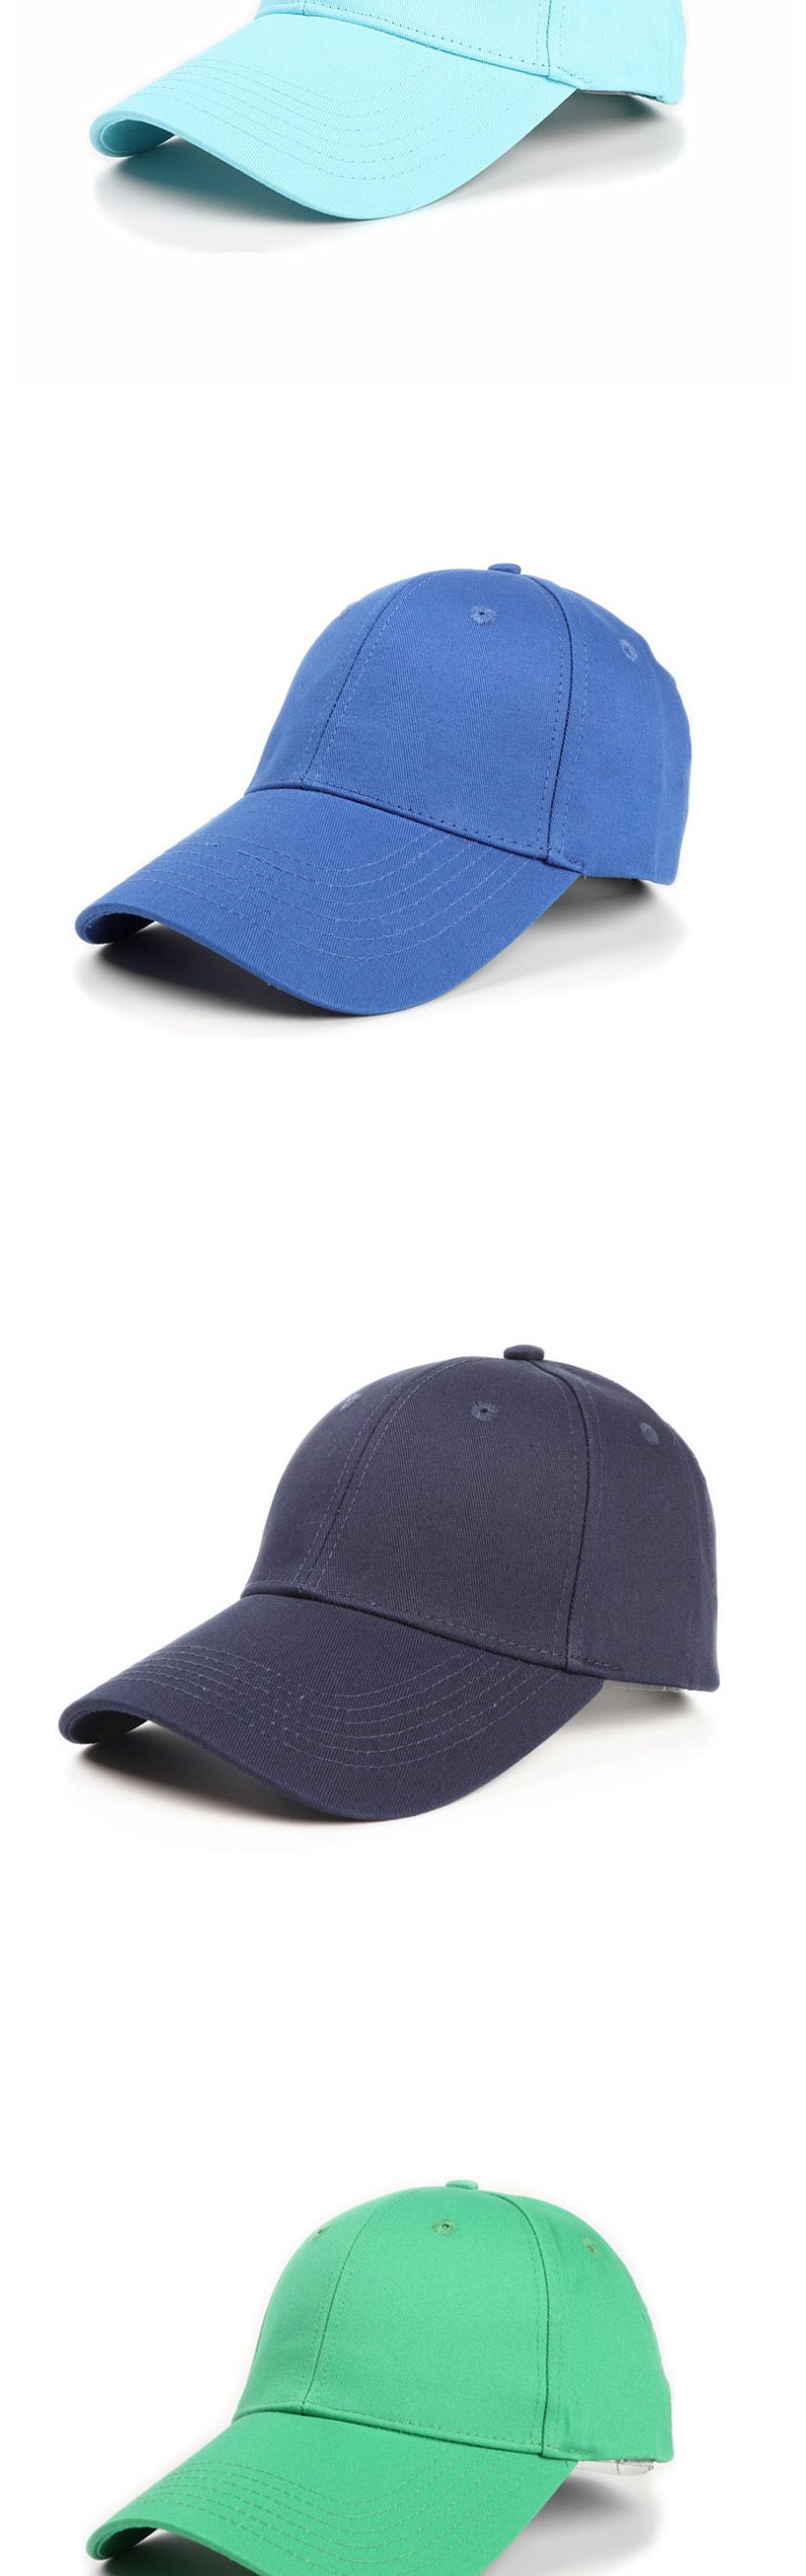 Fashion Khaki Cotton Hard Top And Long Brim Baseball Cap,Baseball Caps